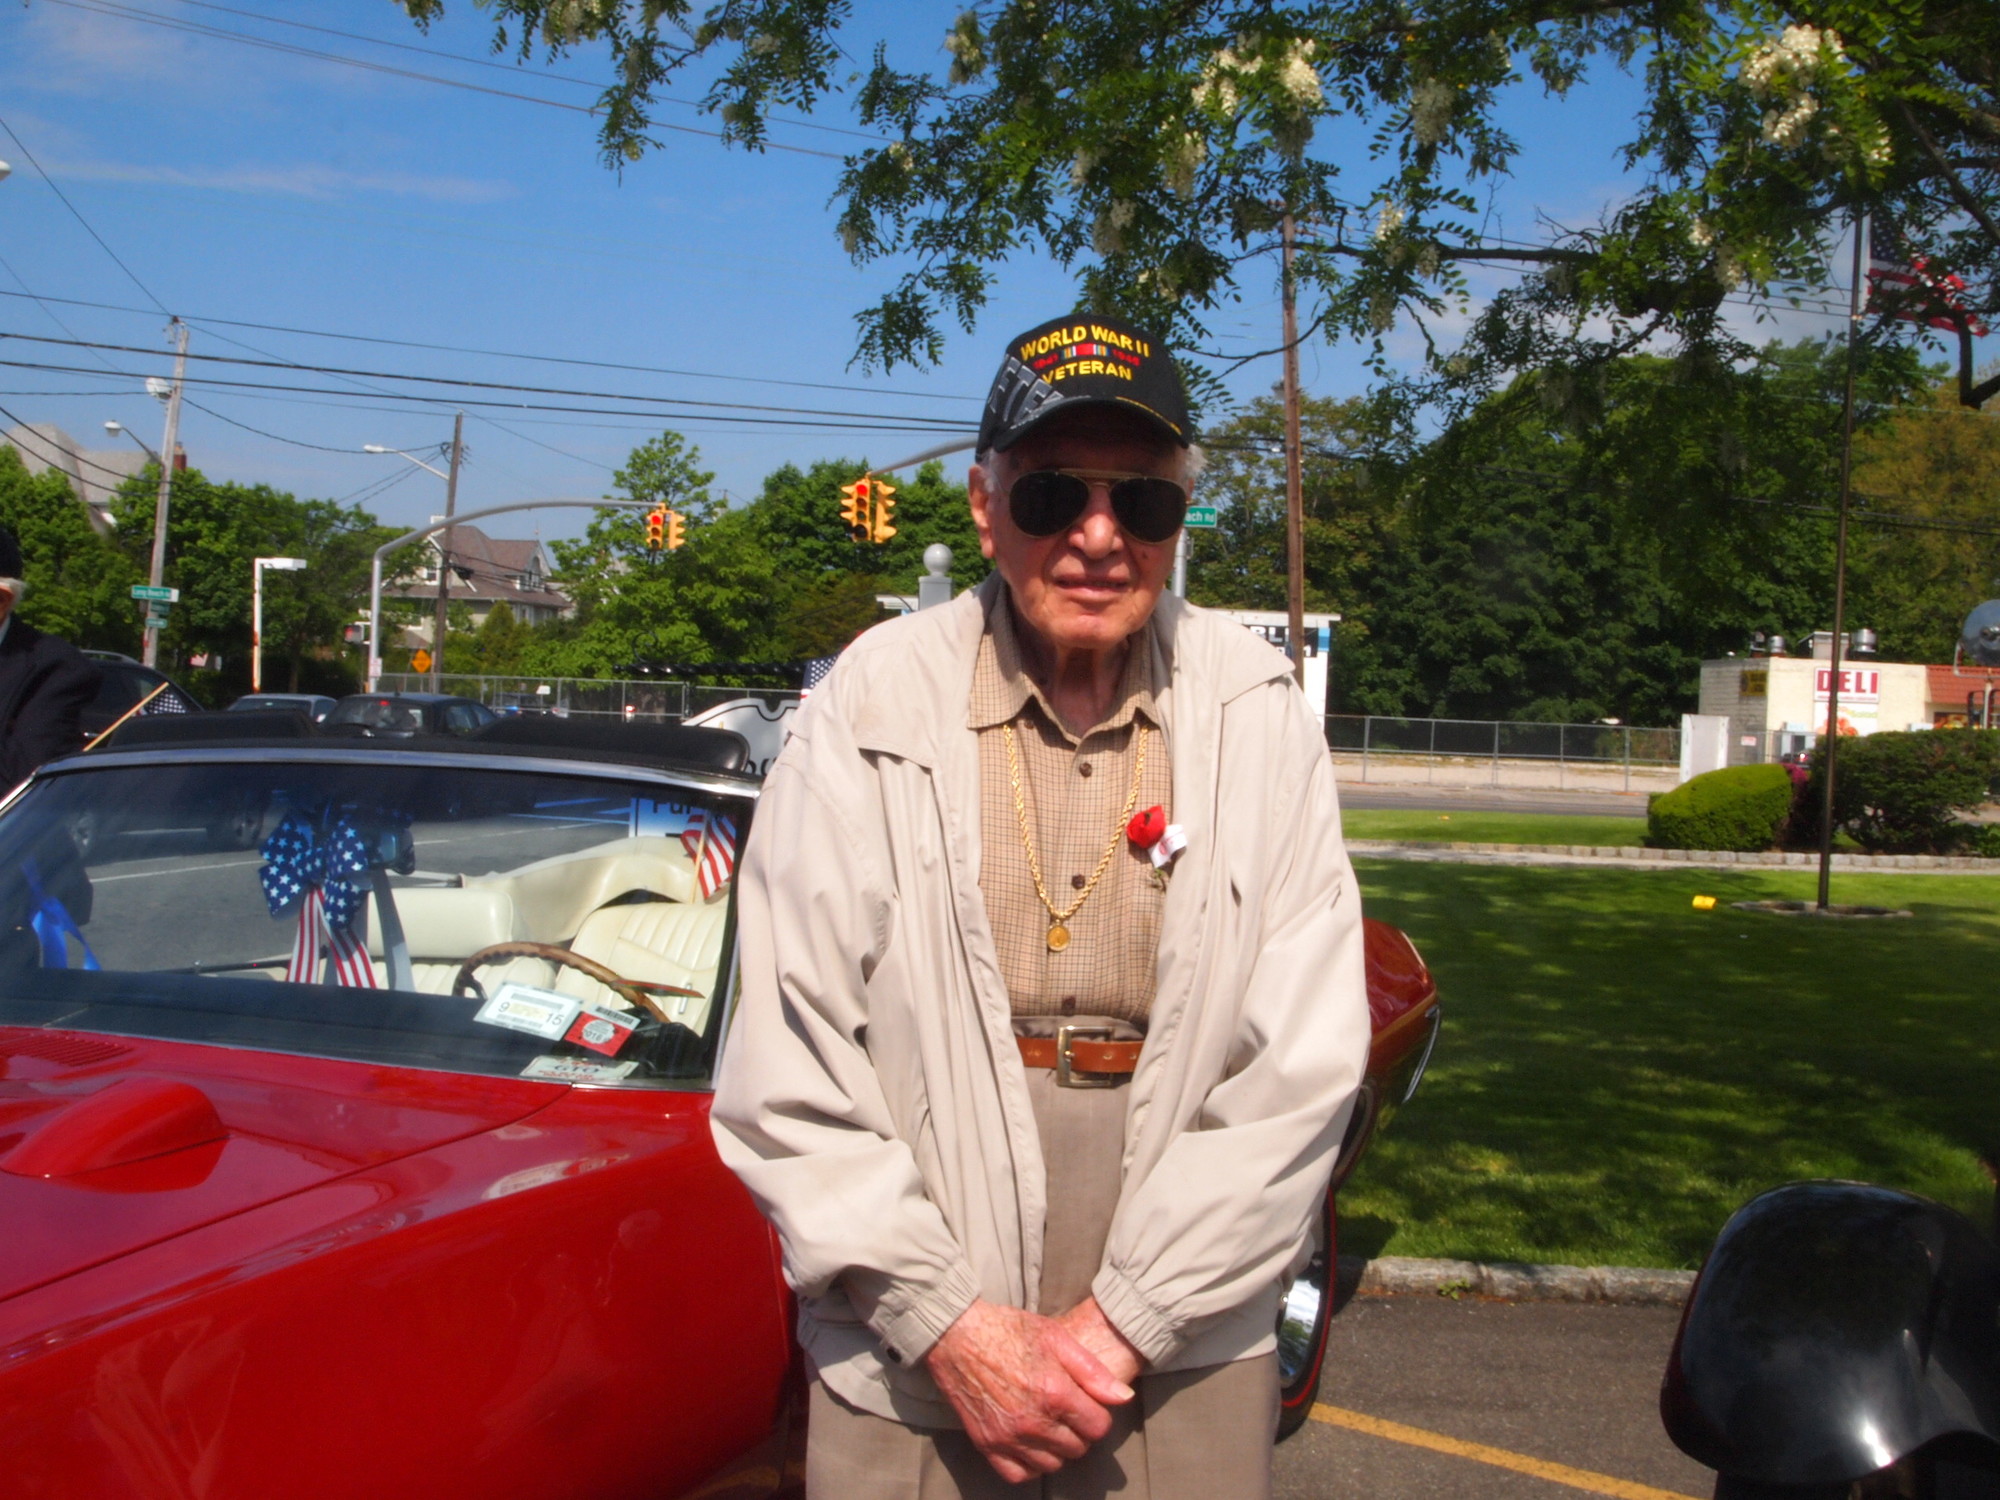 Gus Sabatino, World War II Veteran stands ready for the parade.